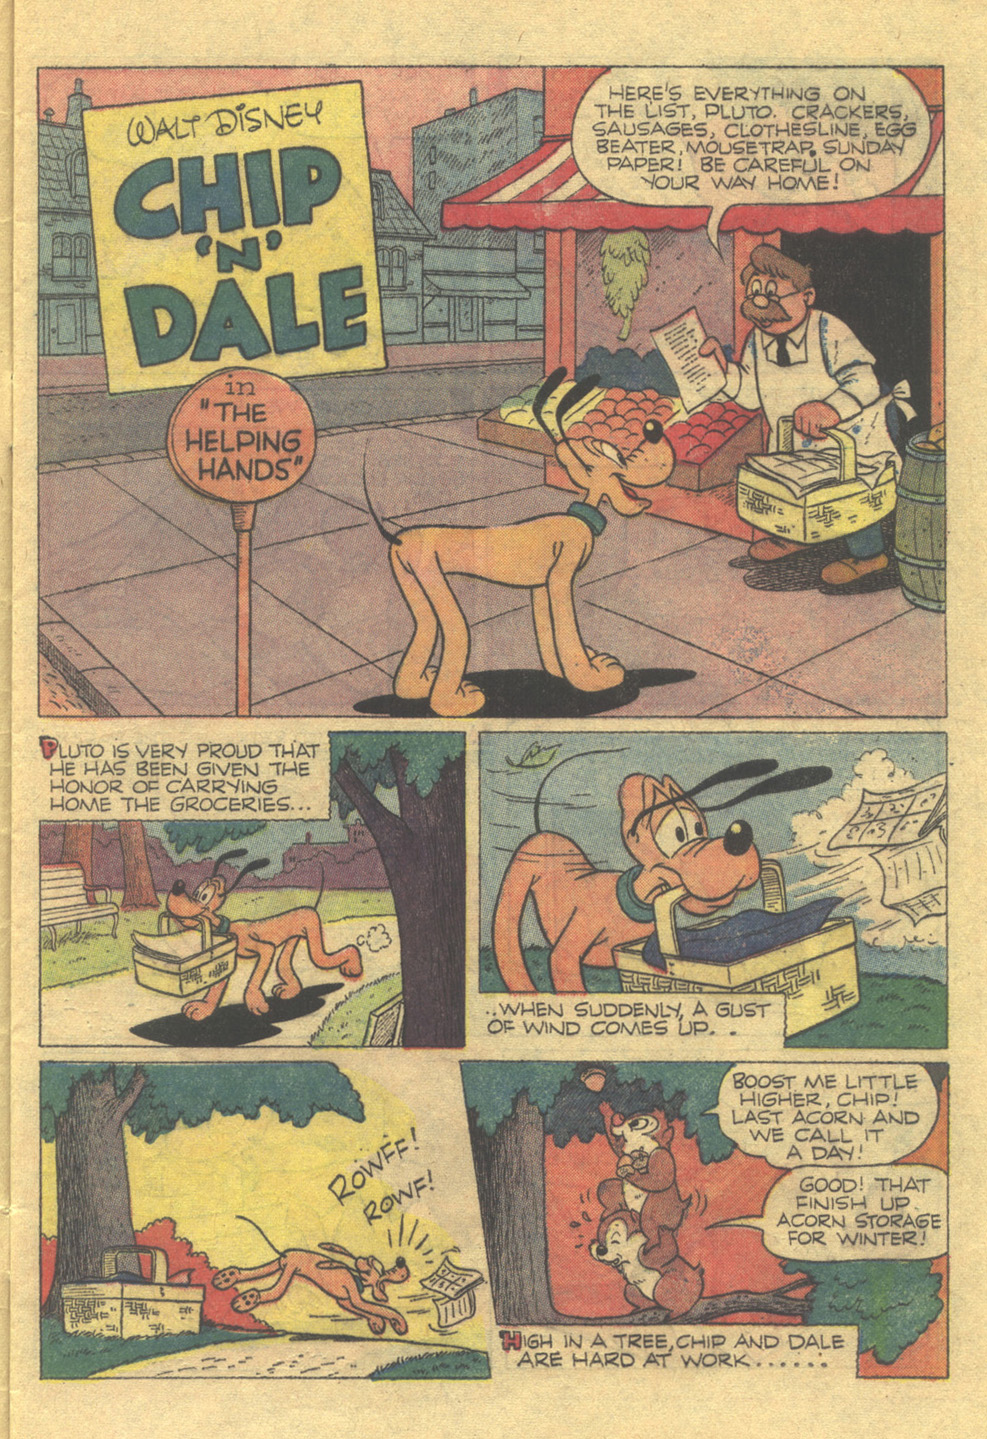 Read online Walt Disney Chip 'n' Dale comic -  Issue #10 - 9